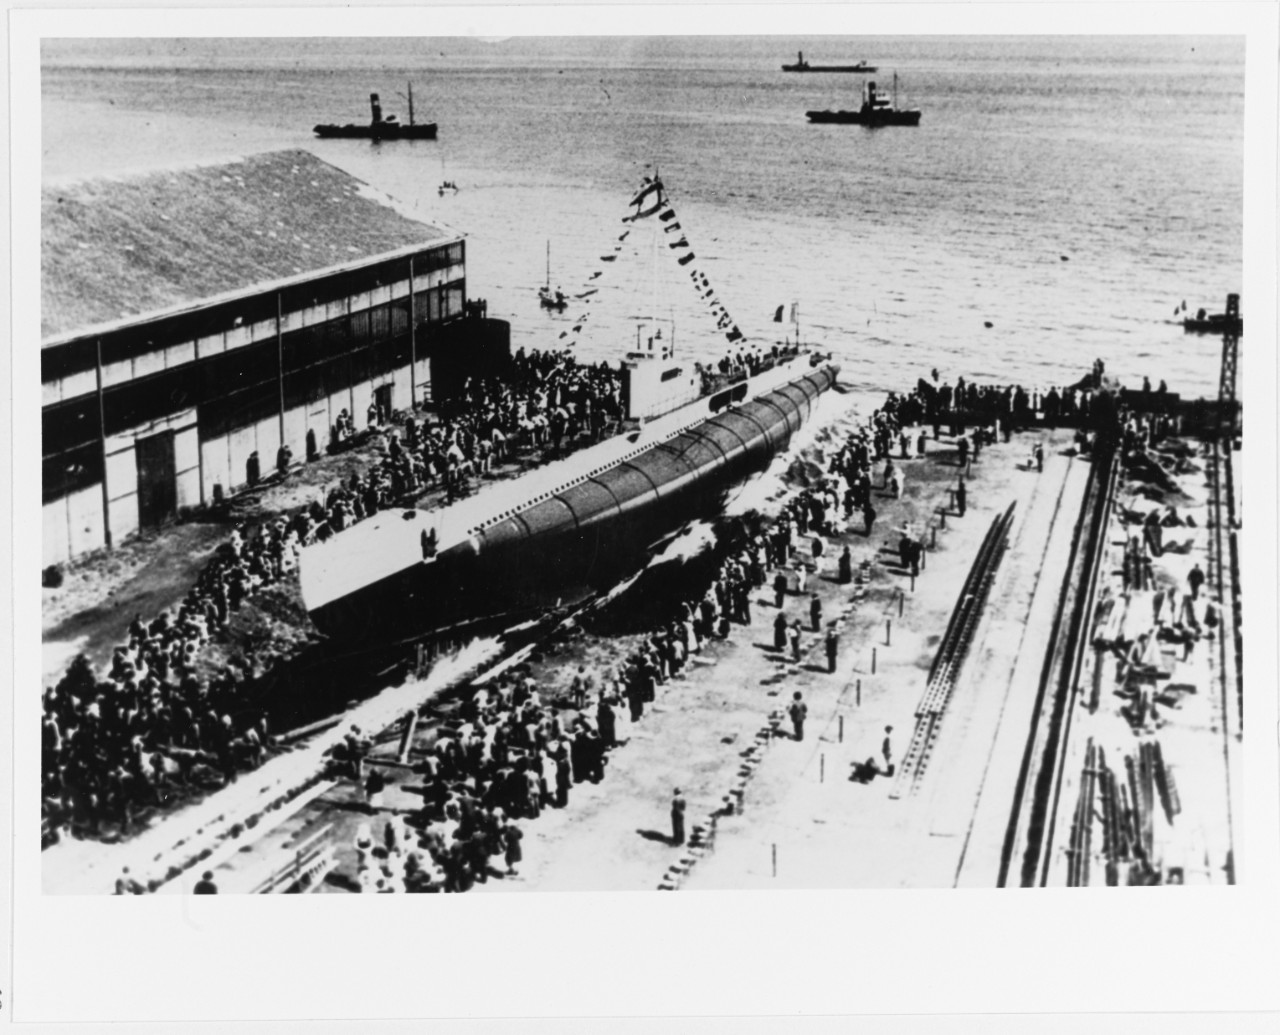 LE CONQUERANT (French submarine, 1934-1942)